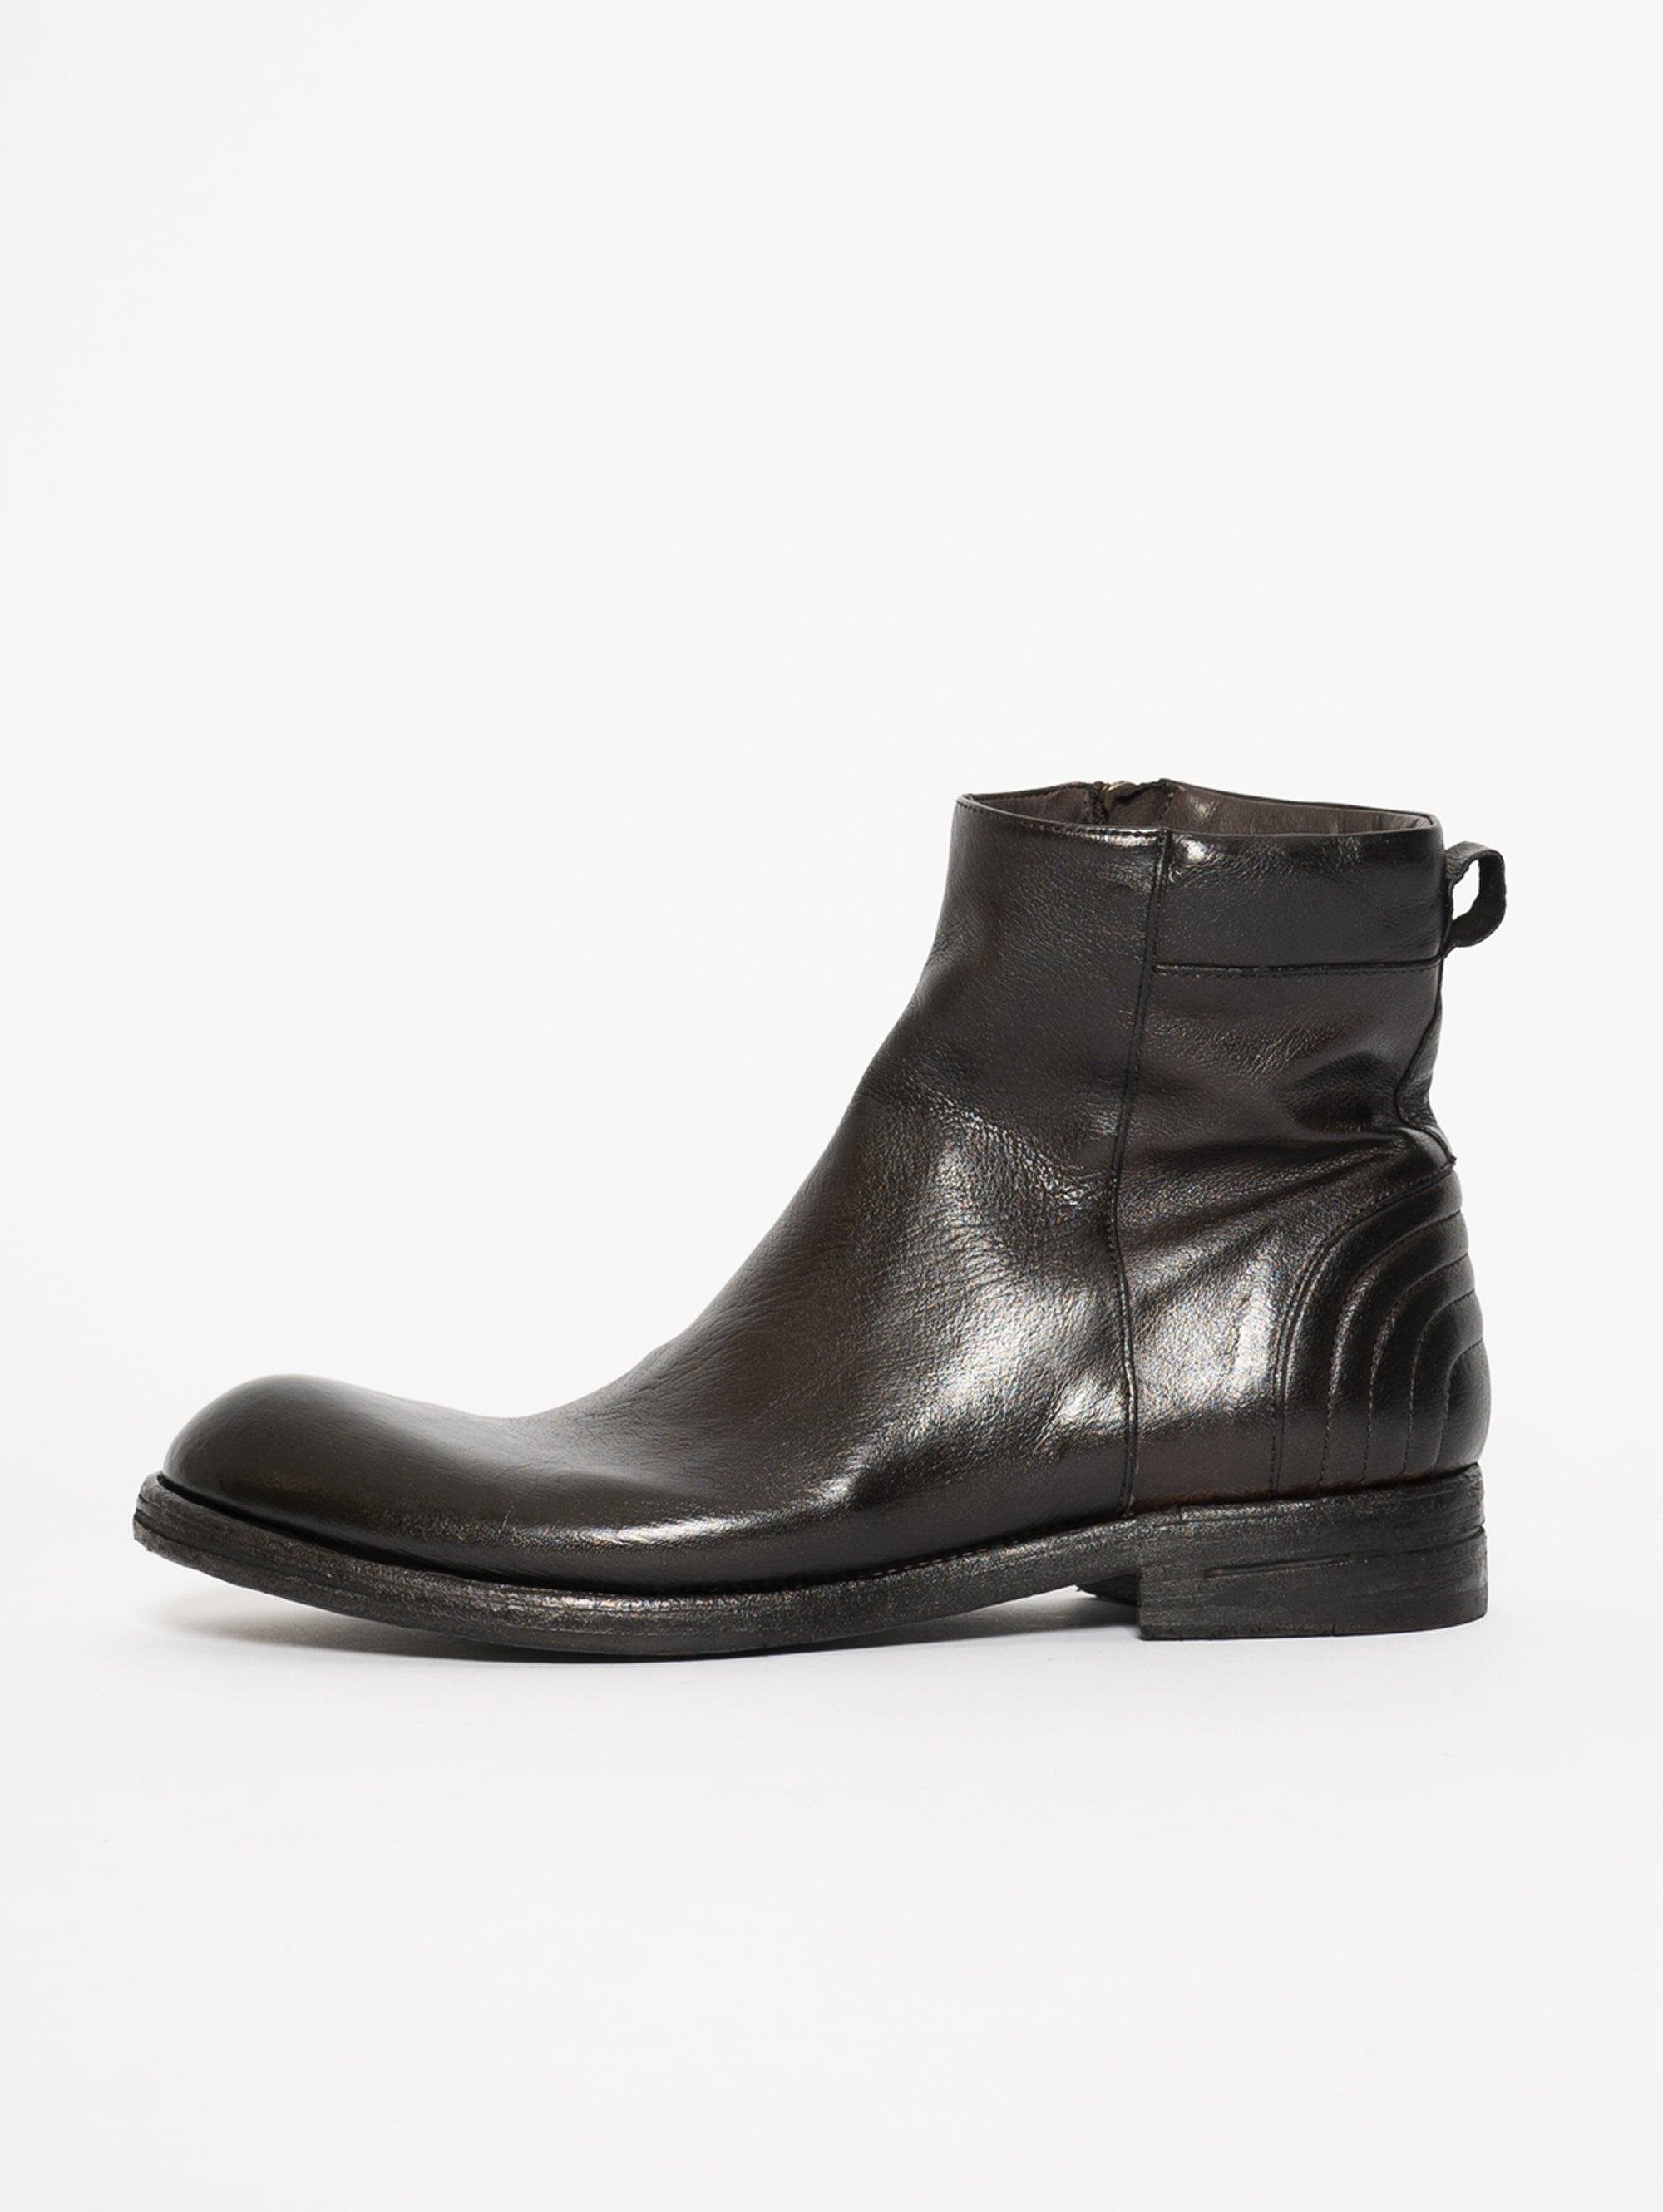 Corvari Brown Leather Boot for Men | Lyst